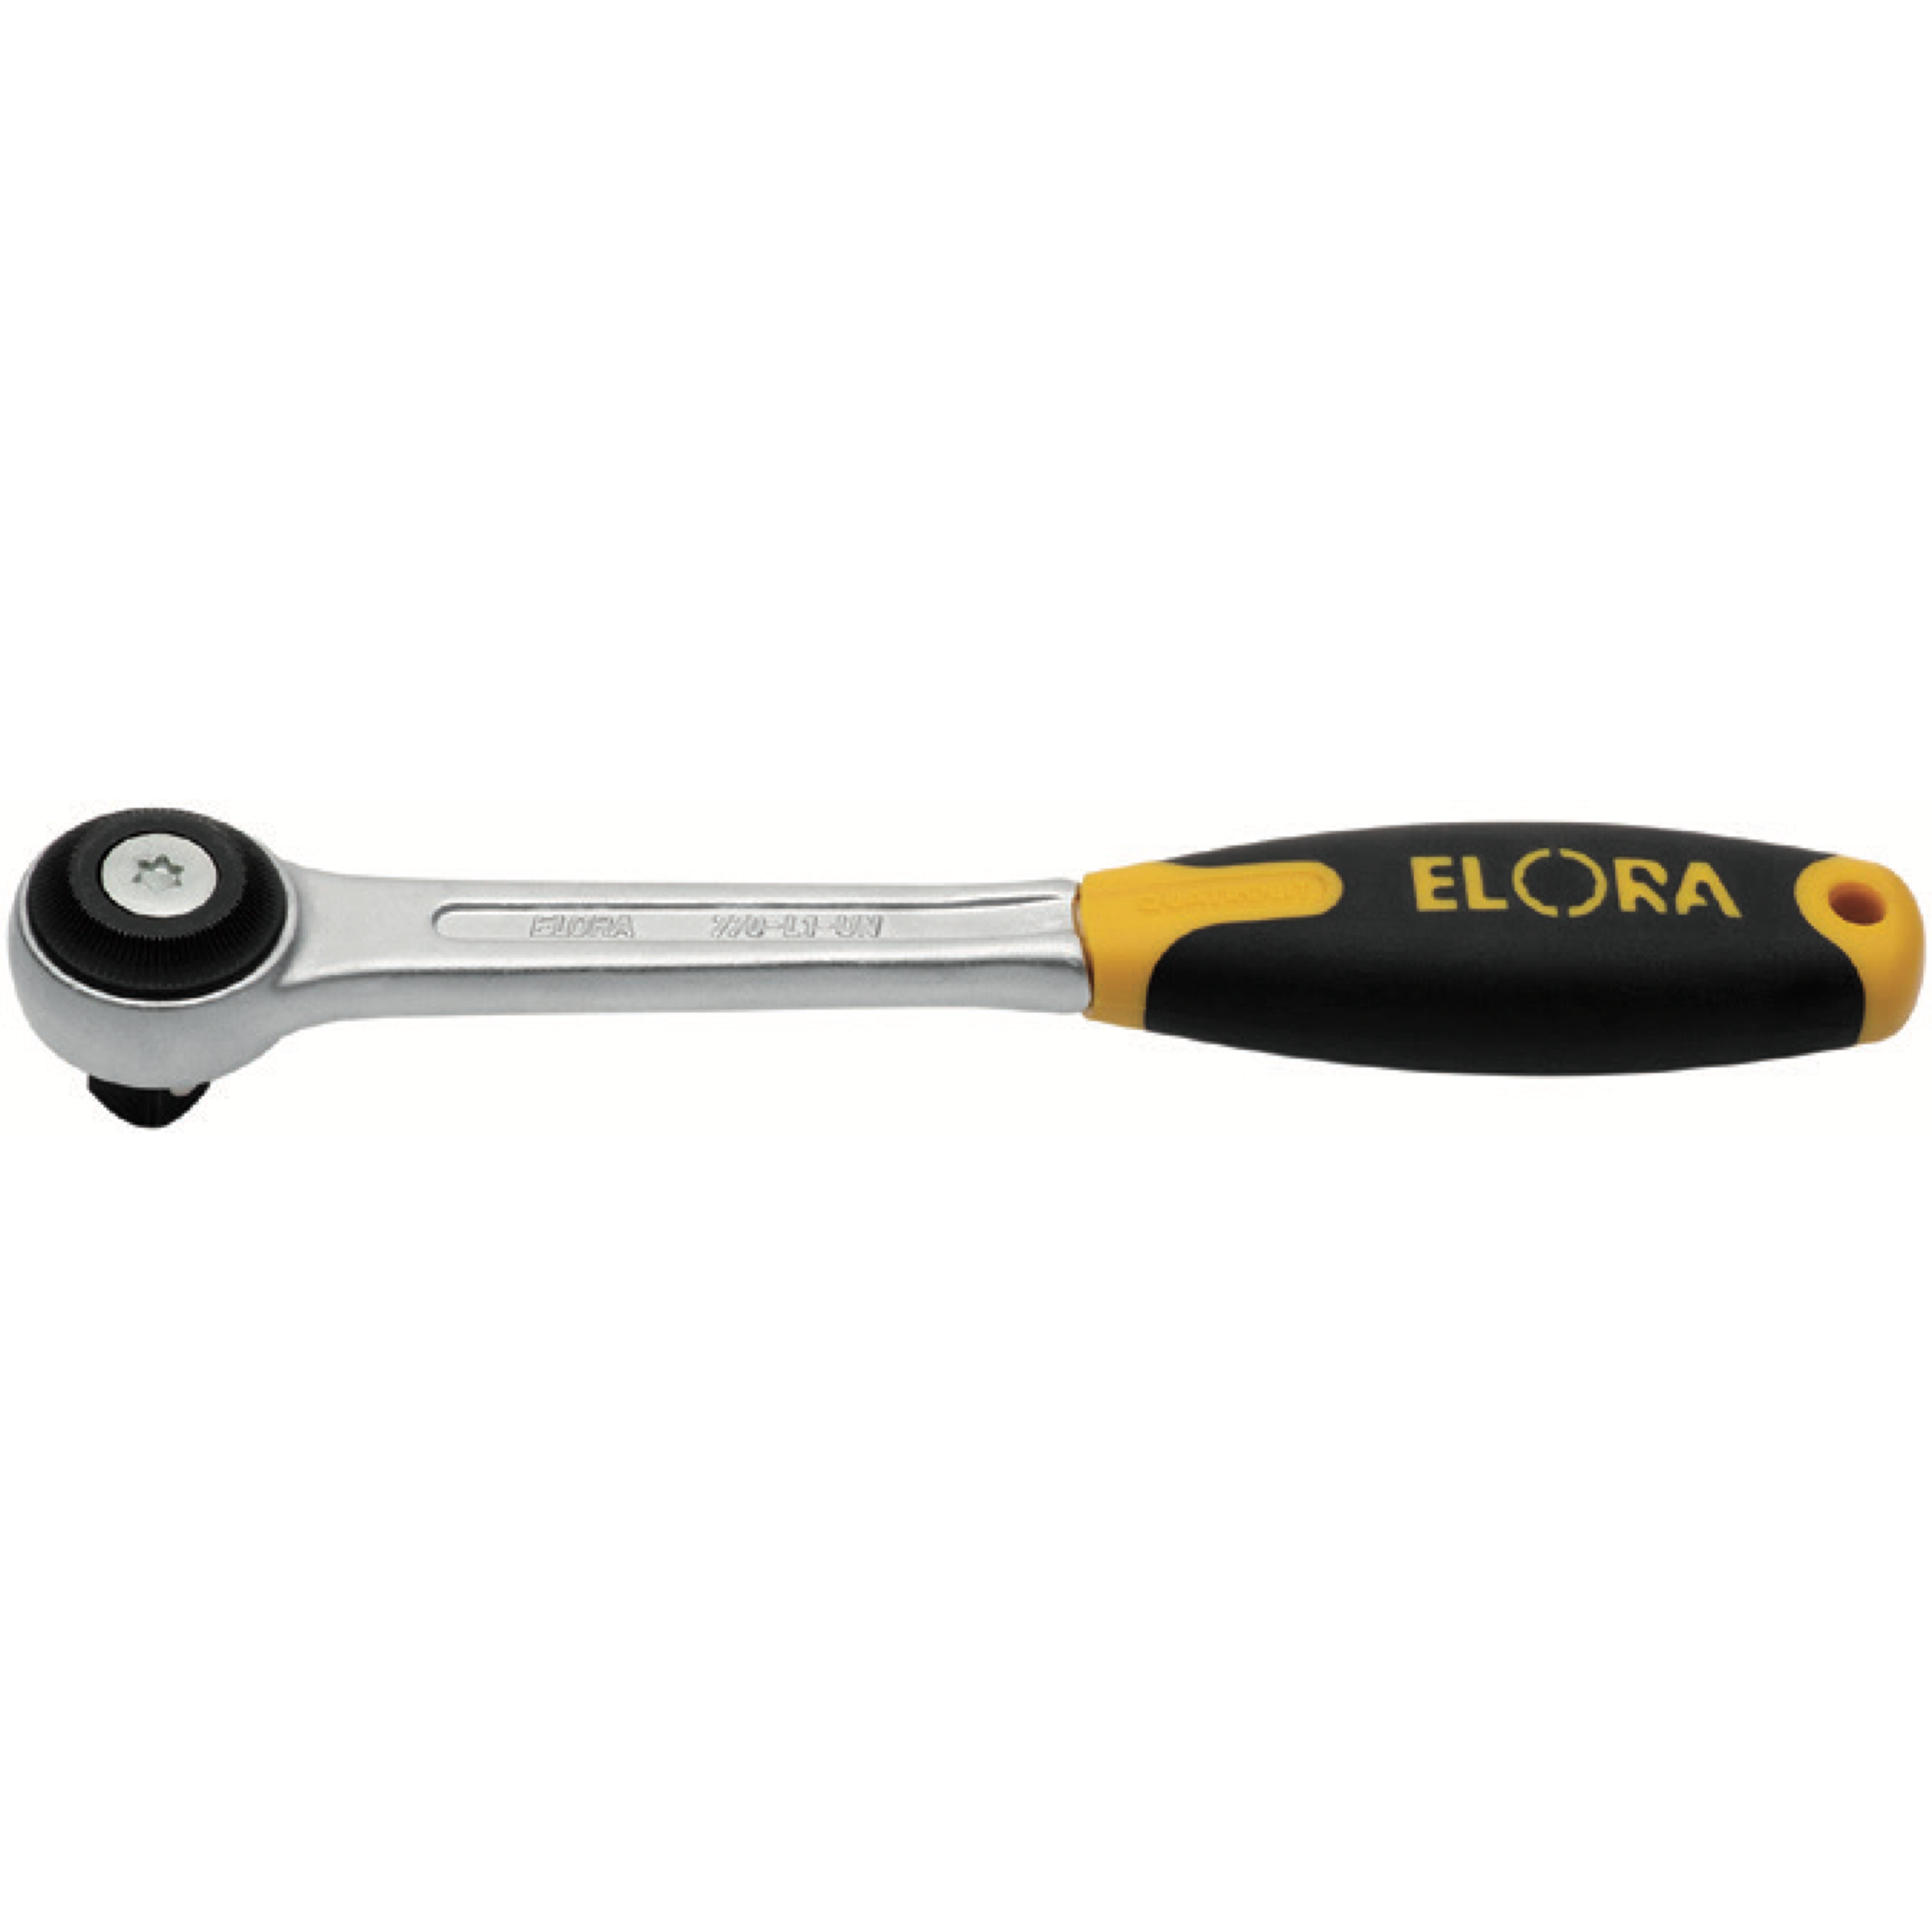 ELORA 770-LE1UN Repair Kit Reversible Ratchet 1/2" (ELORA Tools) - Premium Reversible Ratchet from ELORA - Shop now at Yew Aik.